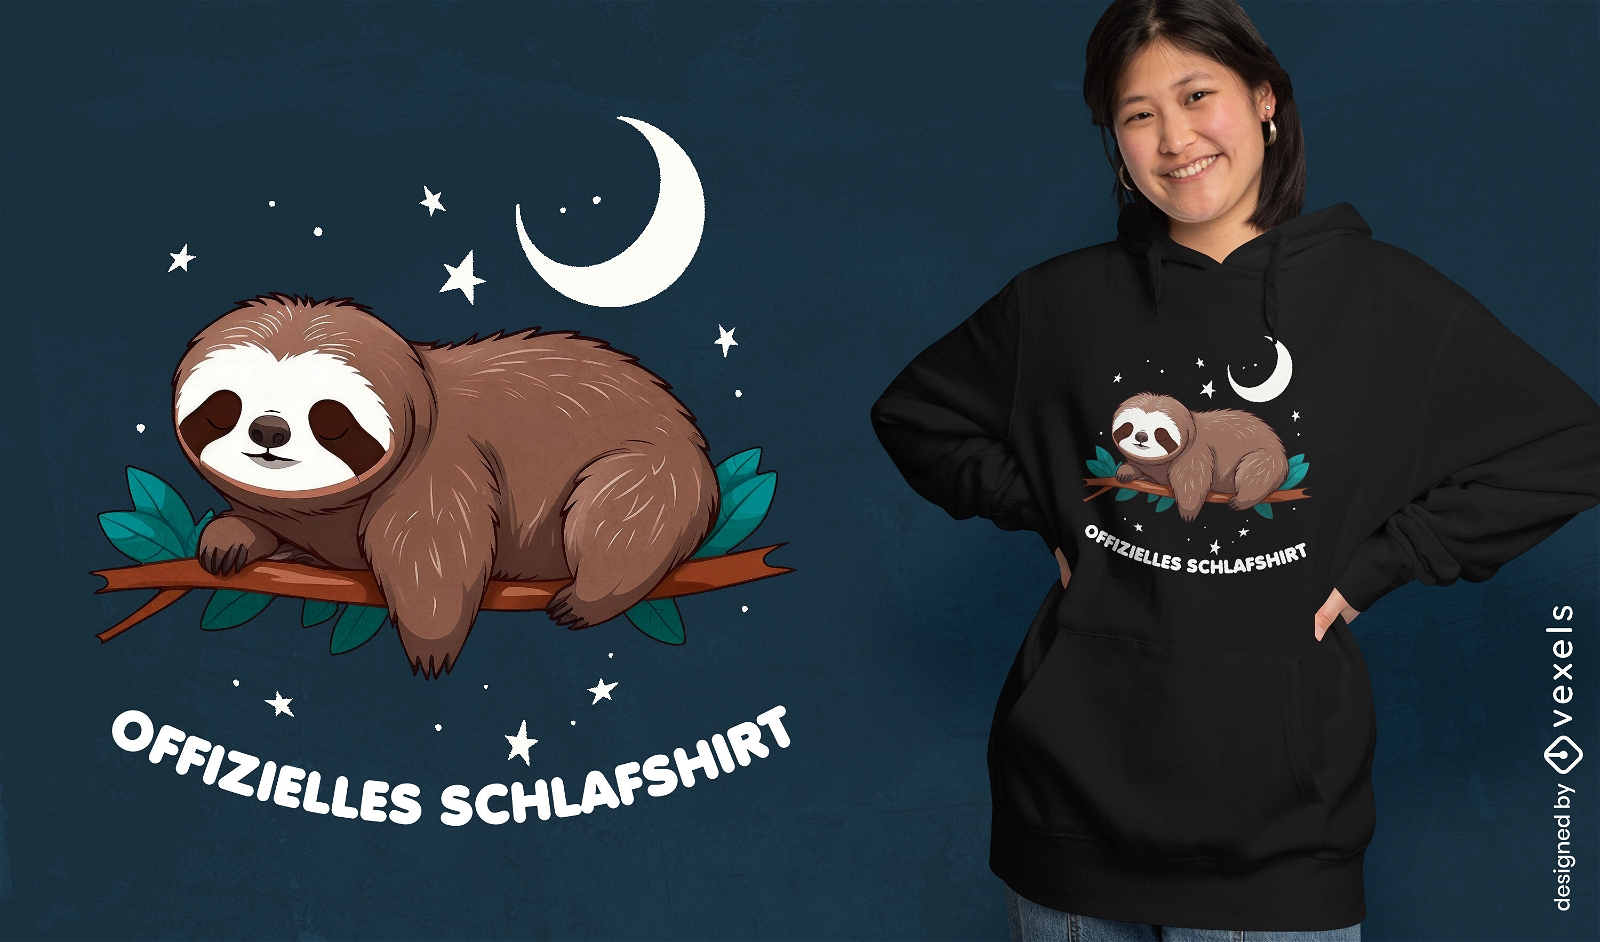 Officially sleeping sloth t-shirt design